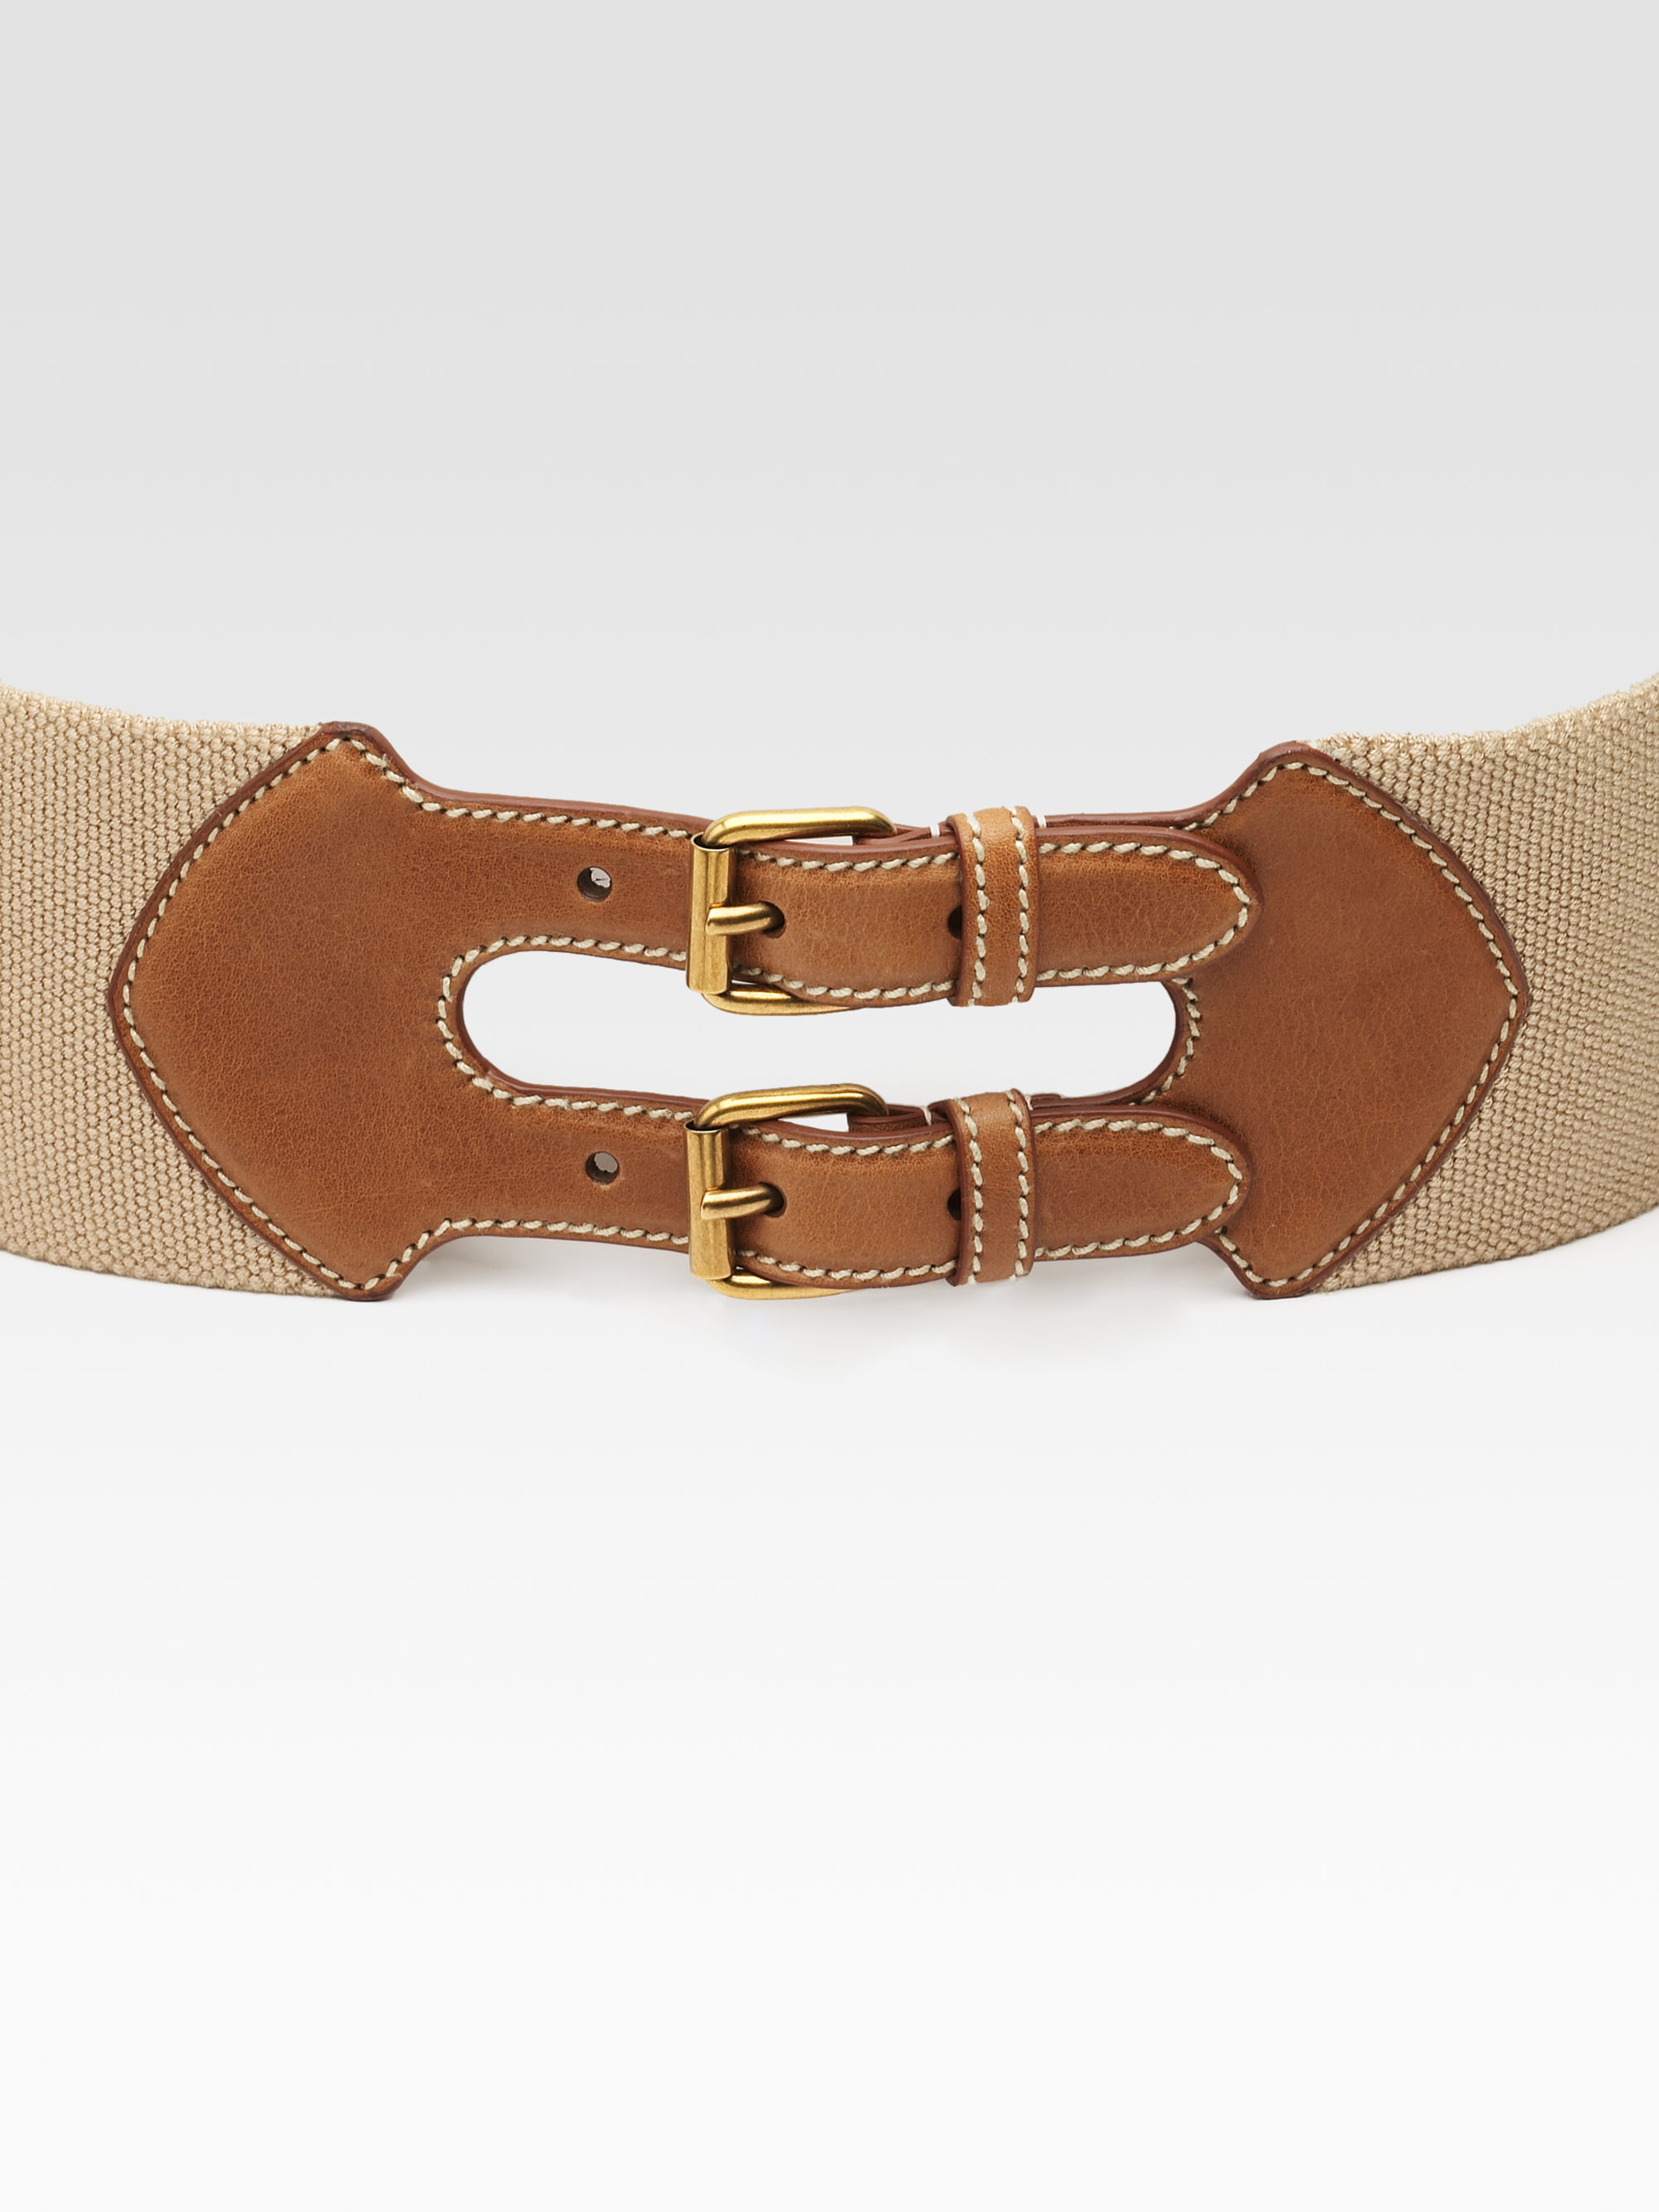 Prada Leather Accented Elastic Belt in Brown | Lyst  